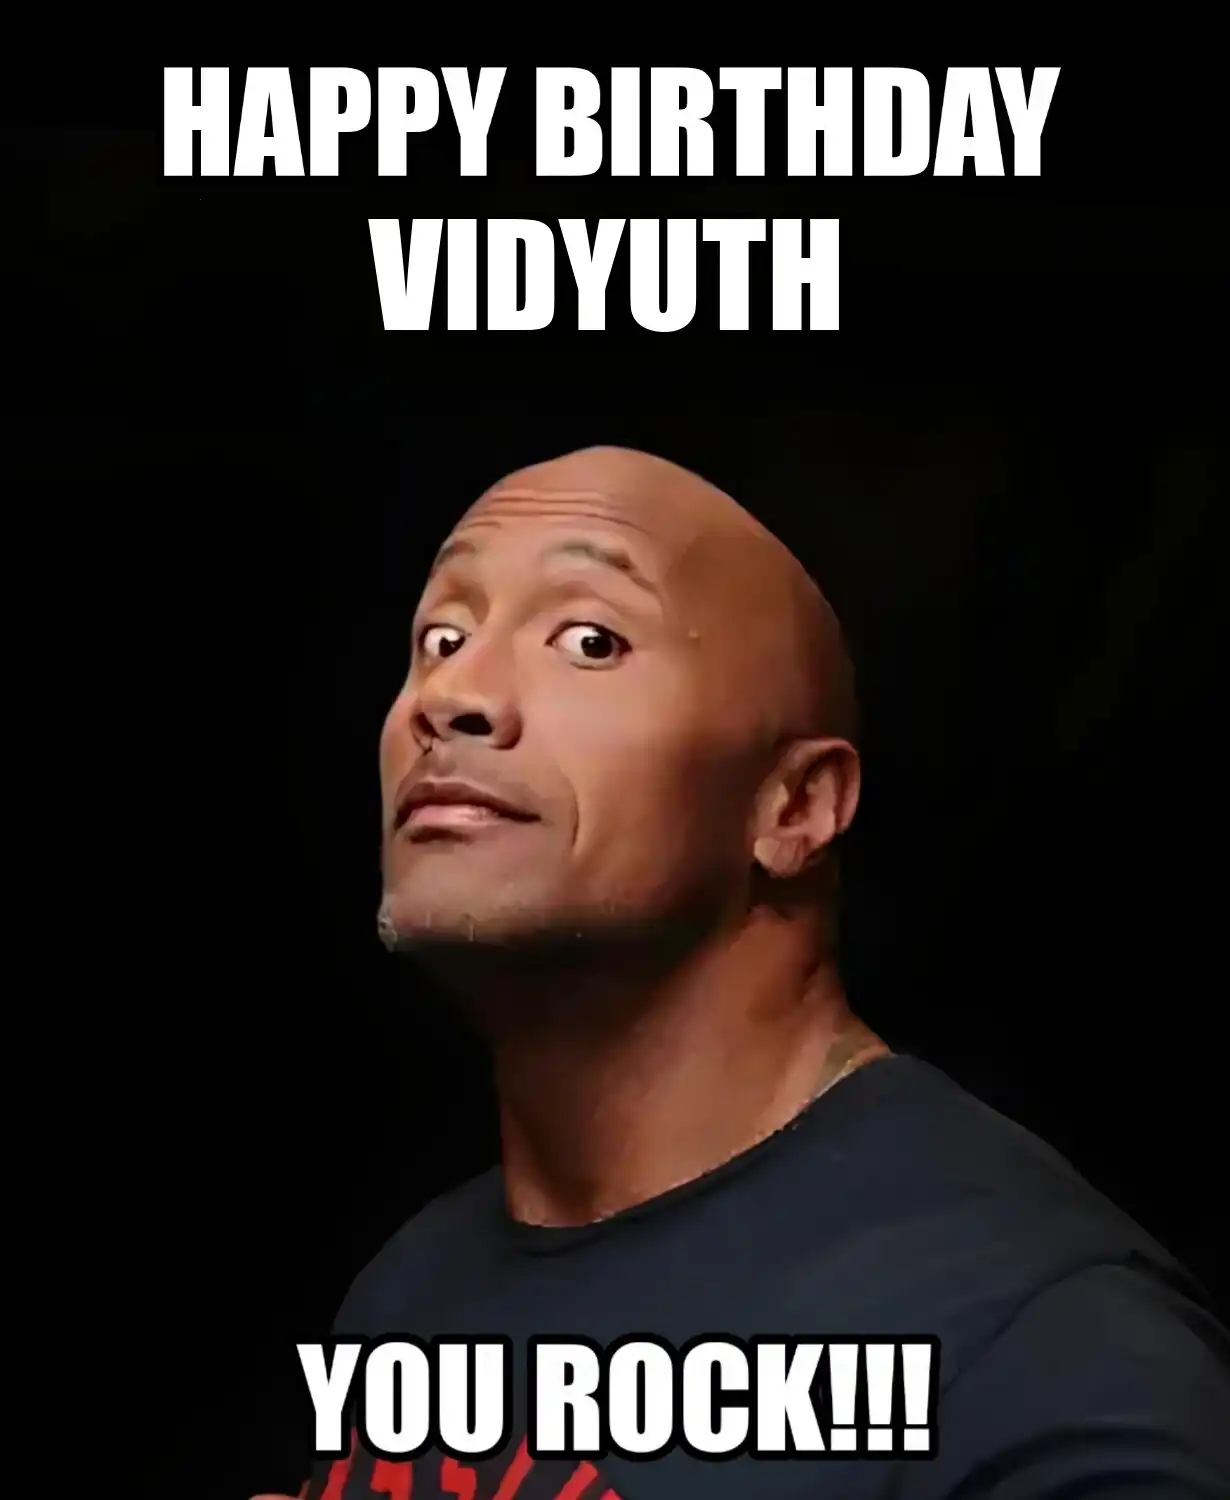 Happy Birthday Vidyuth You Rock Meme